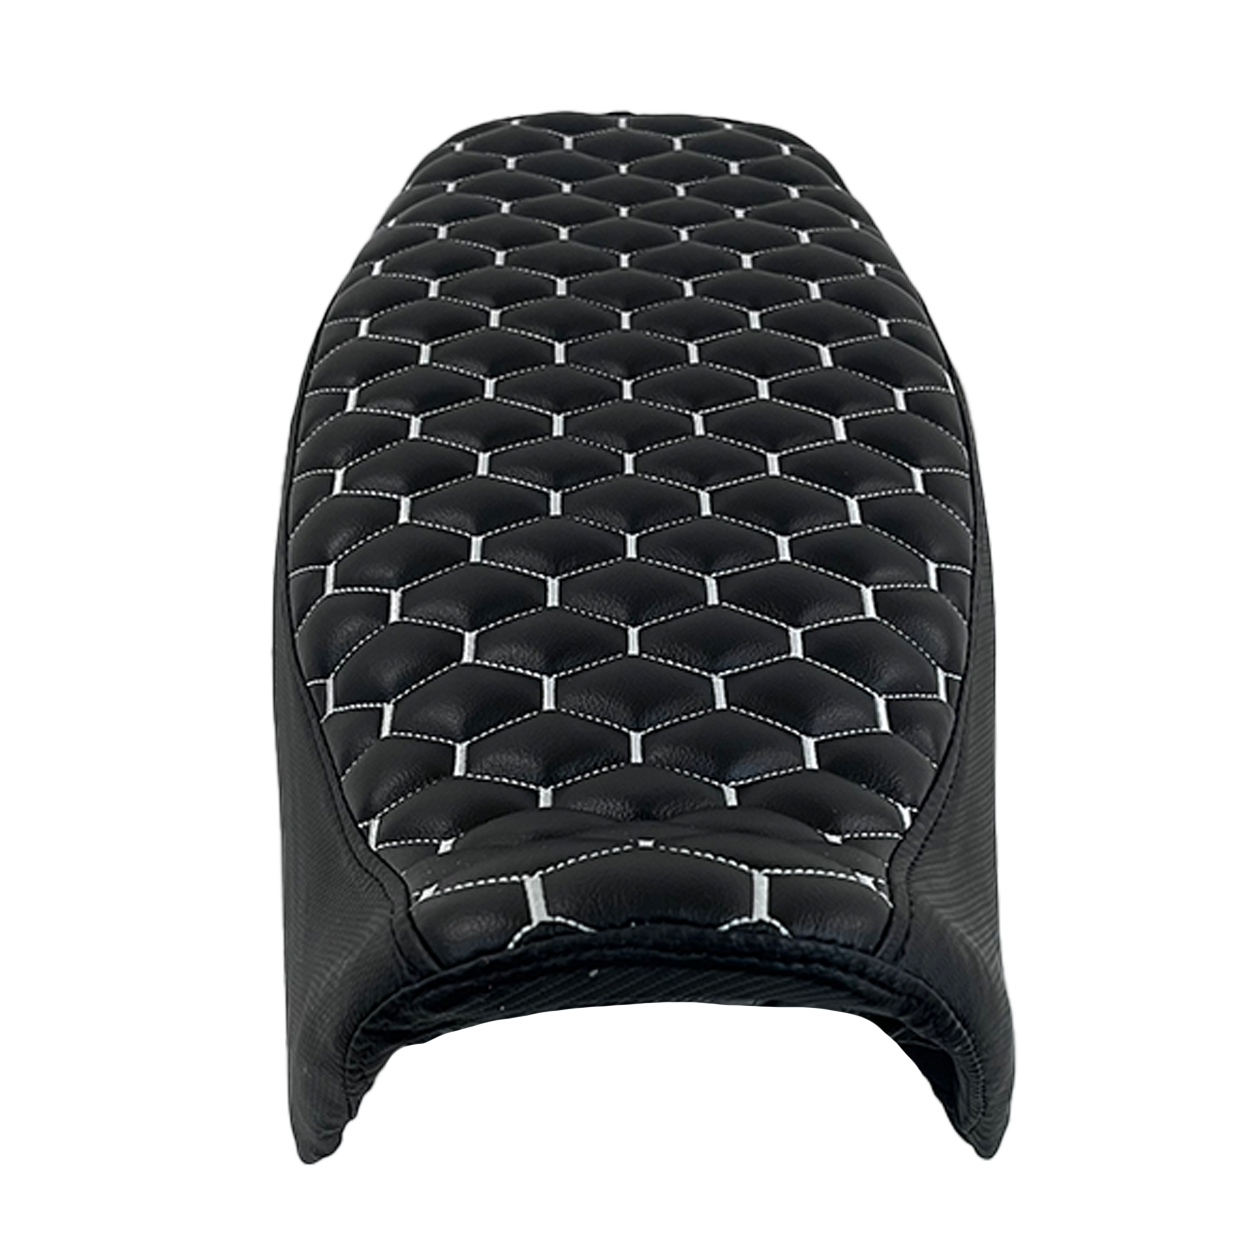 black custom motorcycle seat for Honda Grom